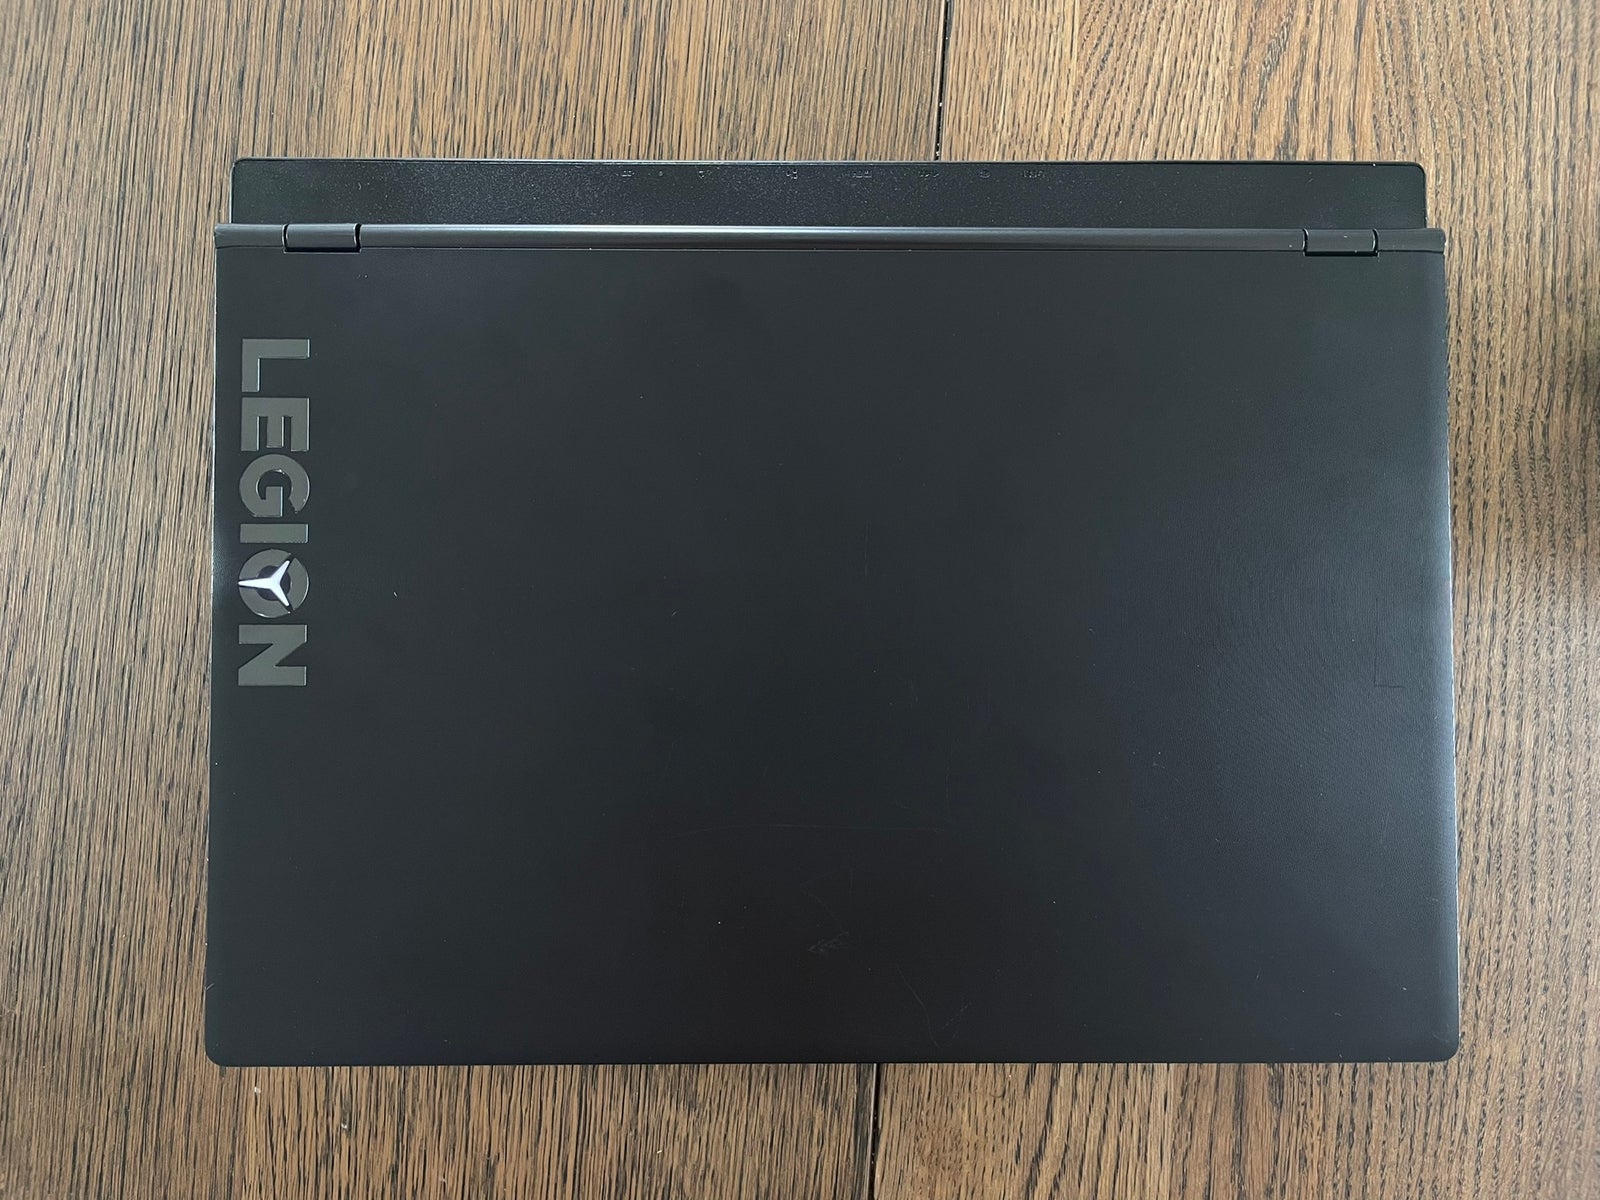 Gaming Laptop Lenovo (upgraded RAM&SSD, serviced)